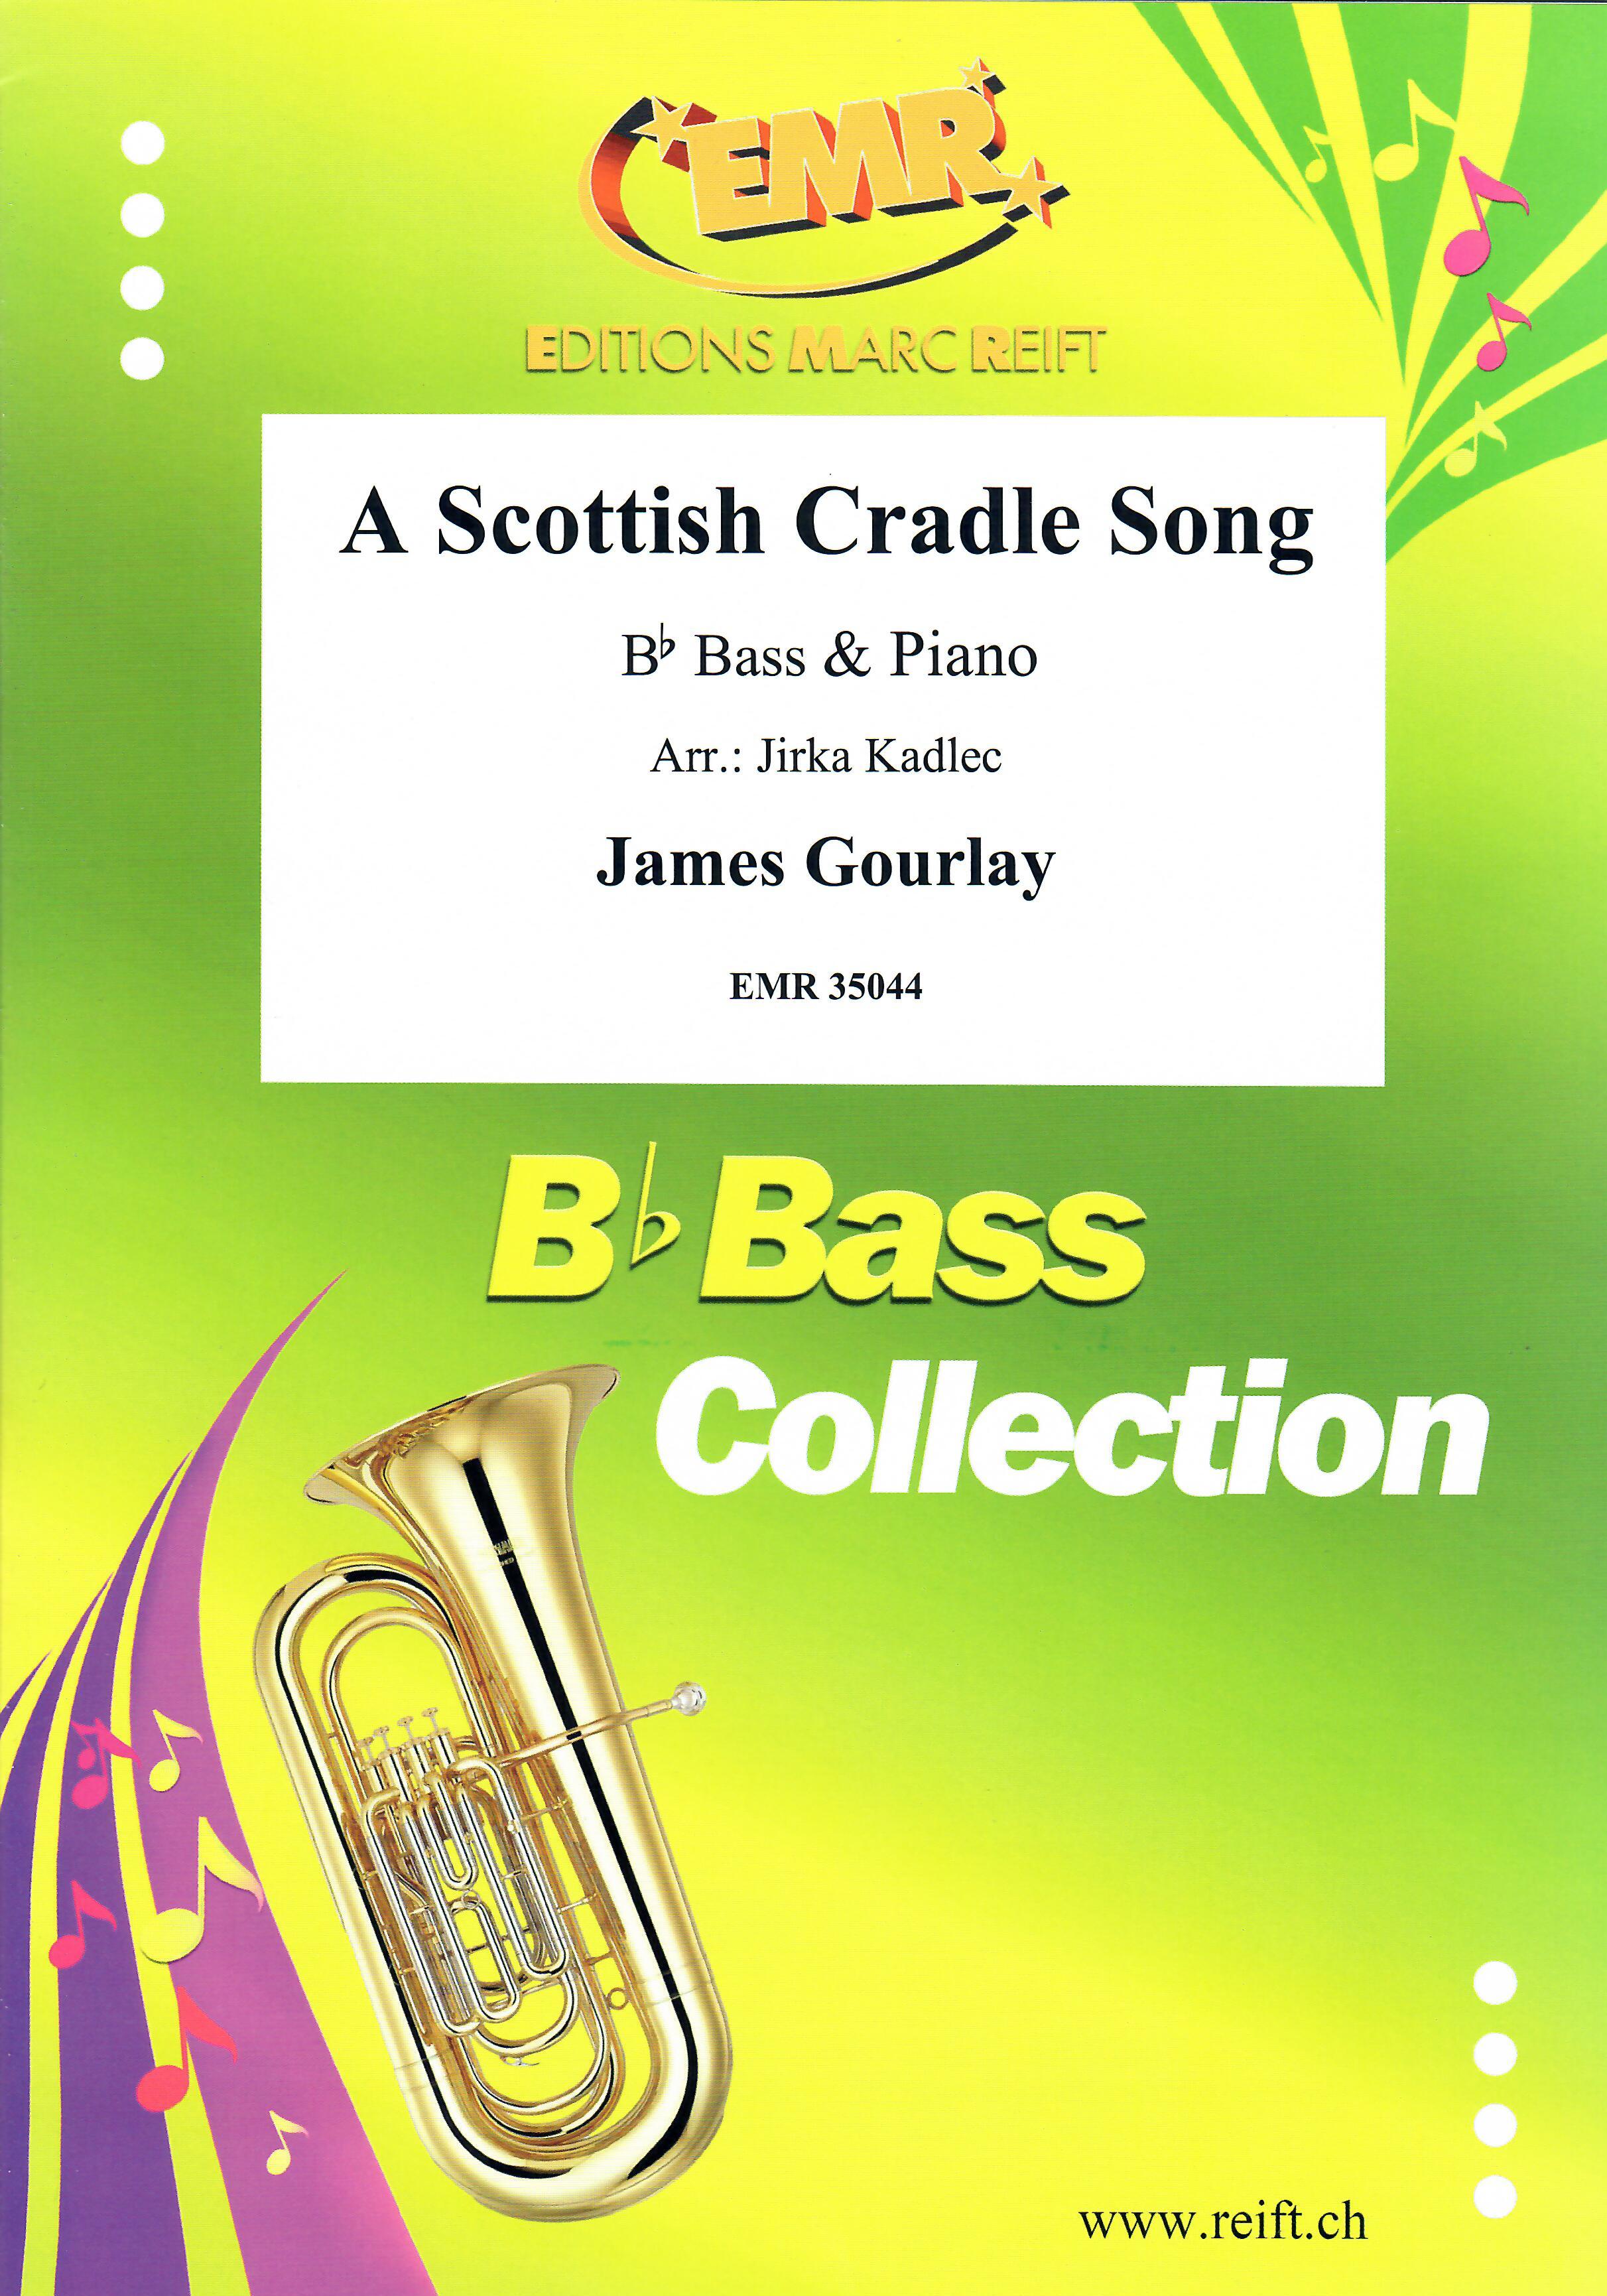 A SCOTTISH CRADLE SONG, SOLOS - E♭. Bass